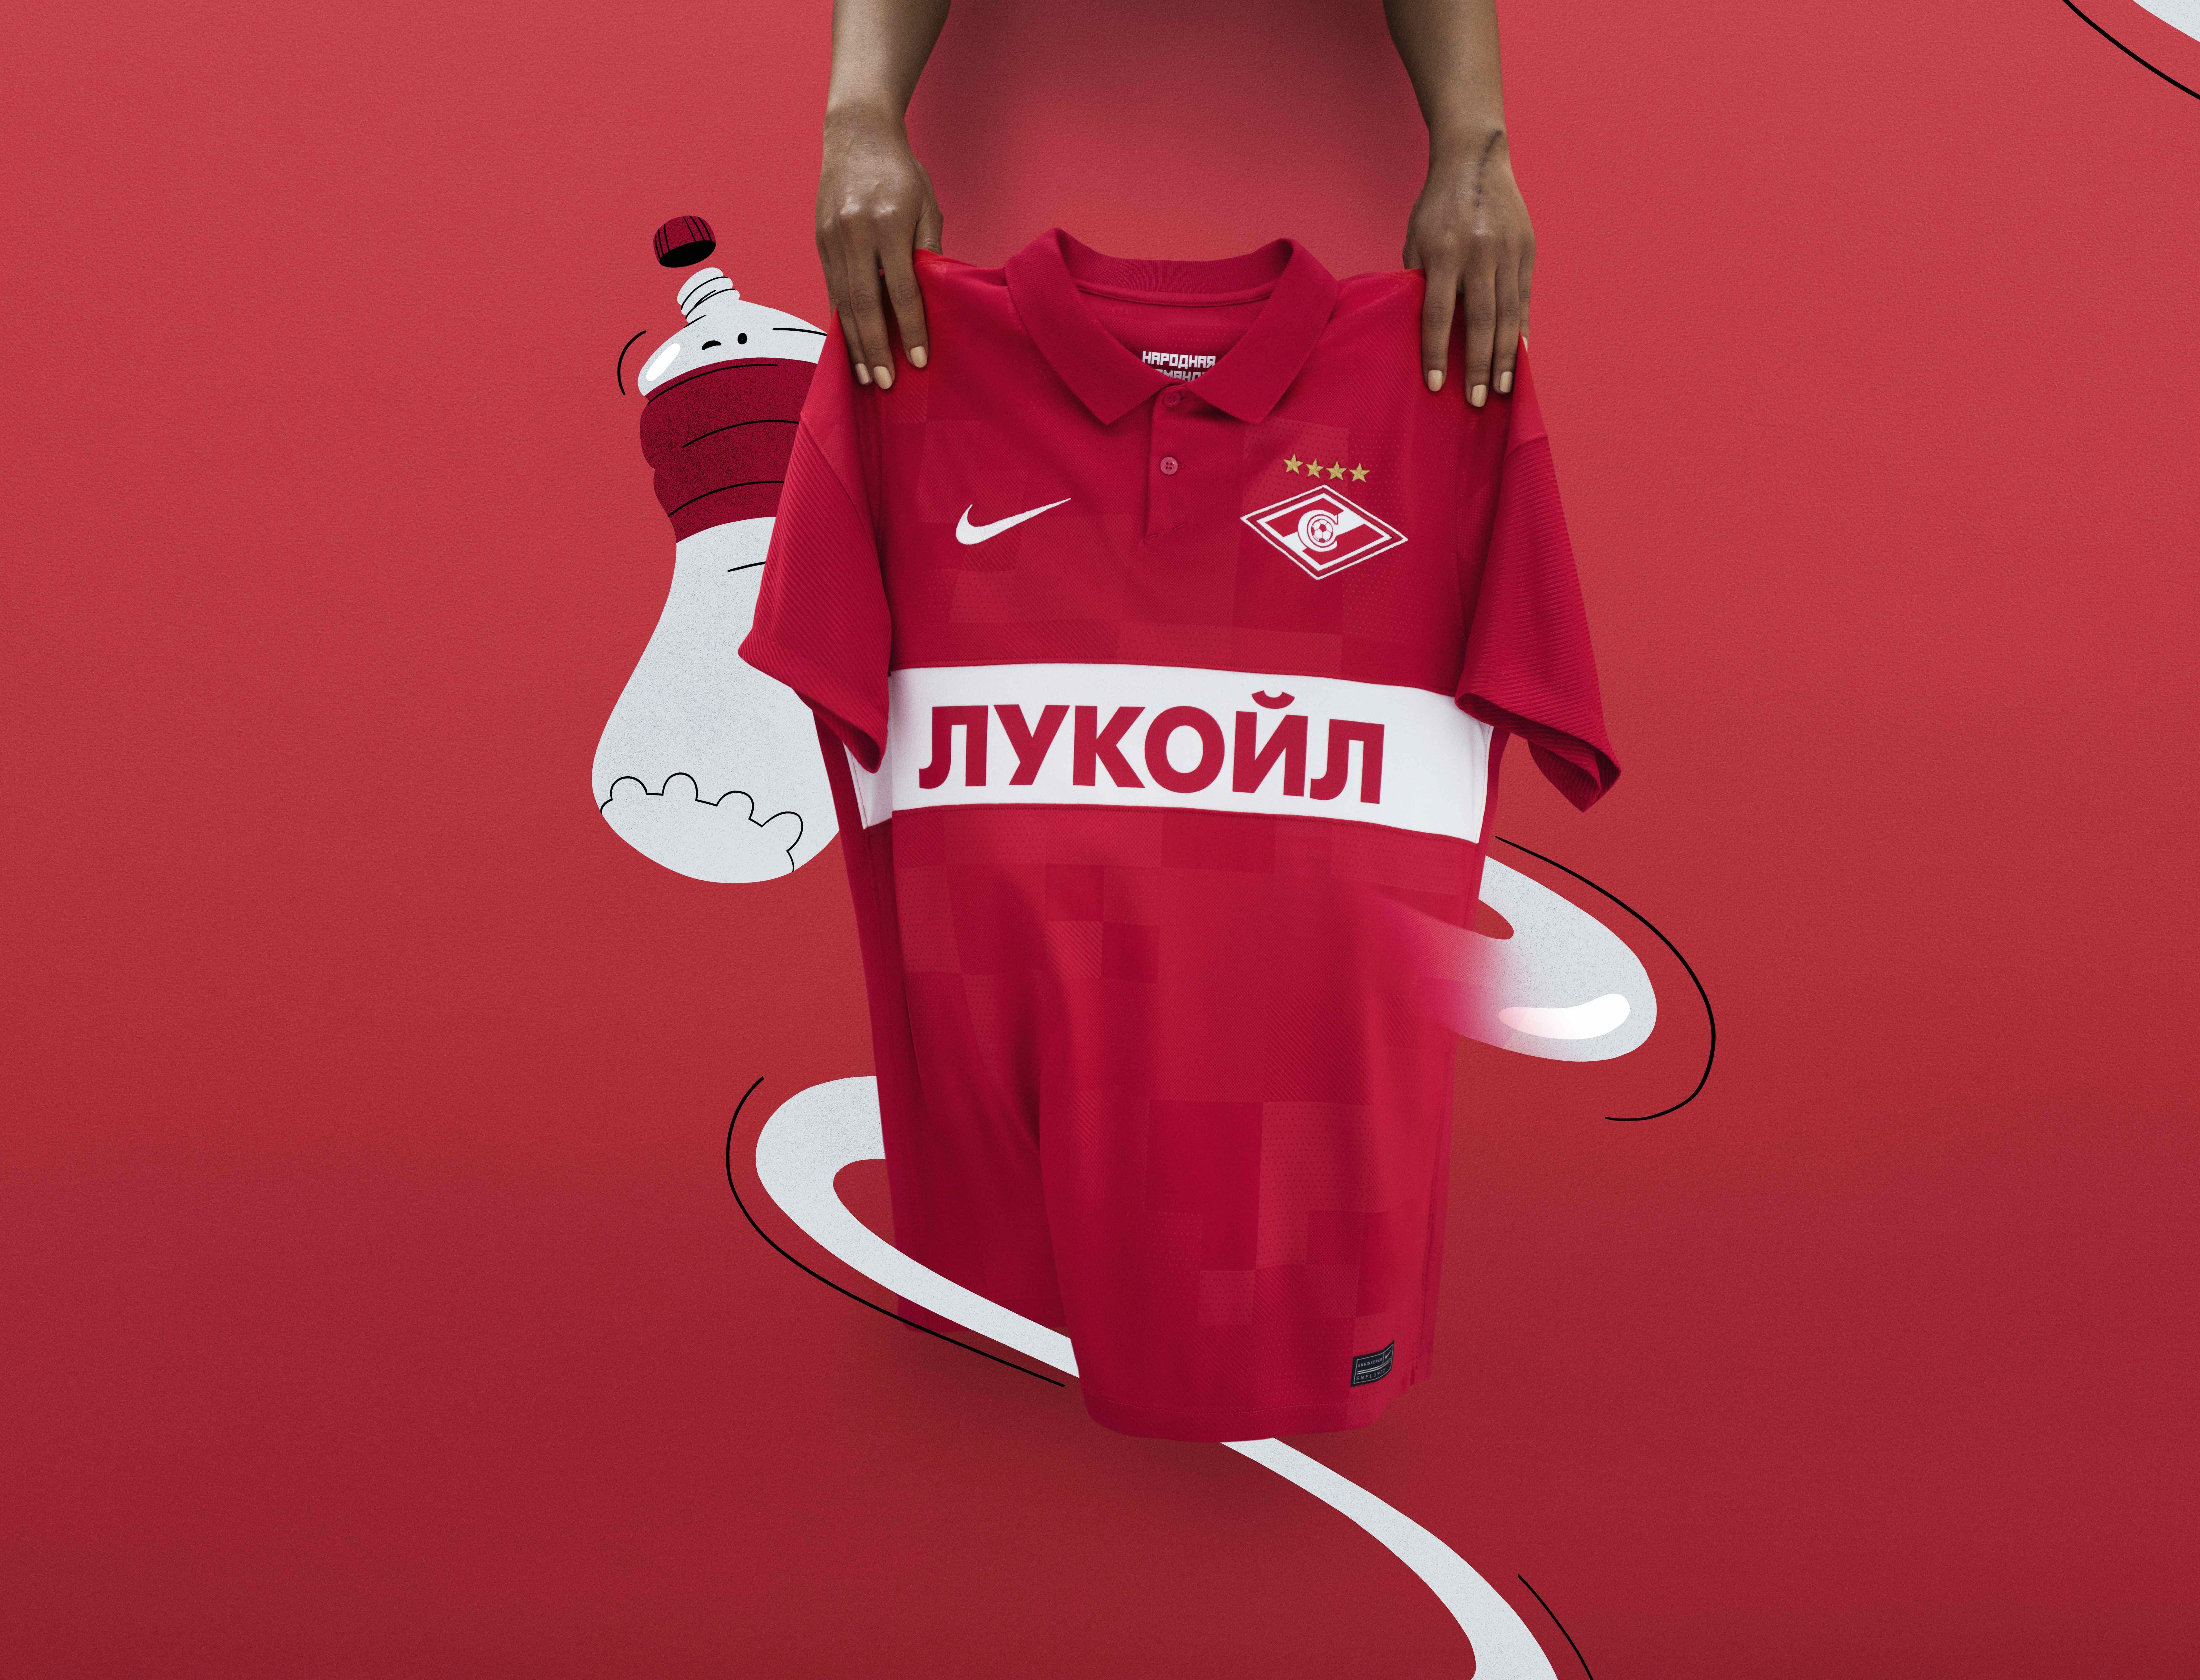 Nike представили форму «Спартак» из переработанного пластика